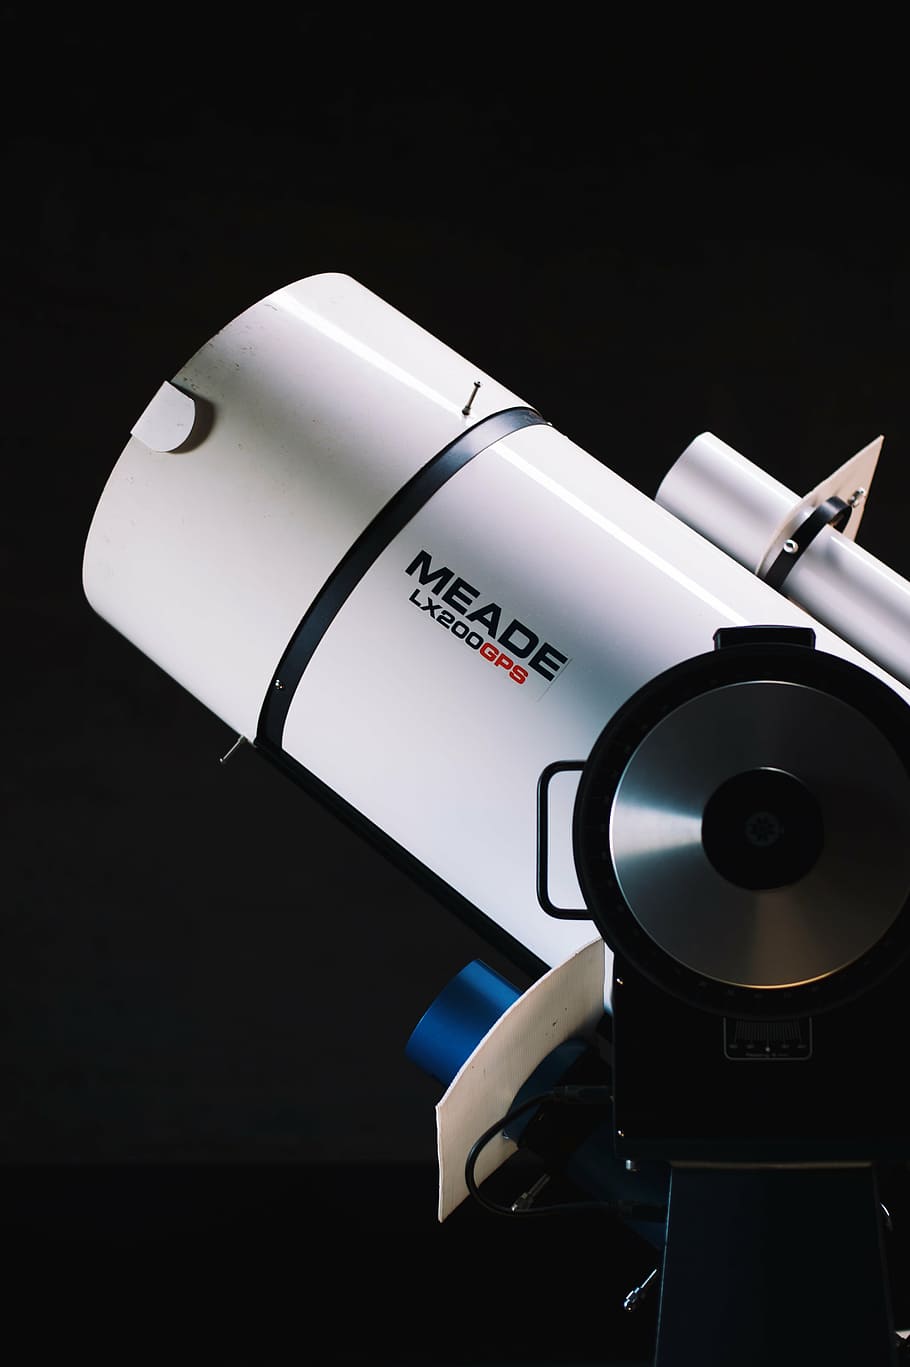 blanco, negro, telescopio meade lx 200gps, lx200gps, óptico, instrumento, microscopio, telescopio, vigilancia, lente - Instrumento óptico